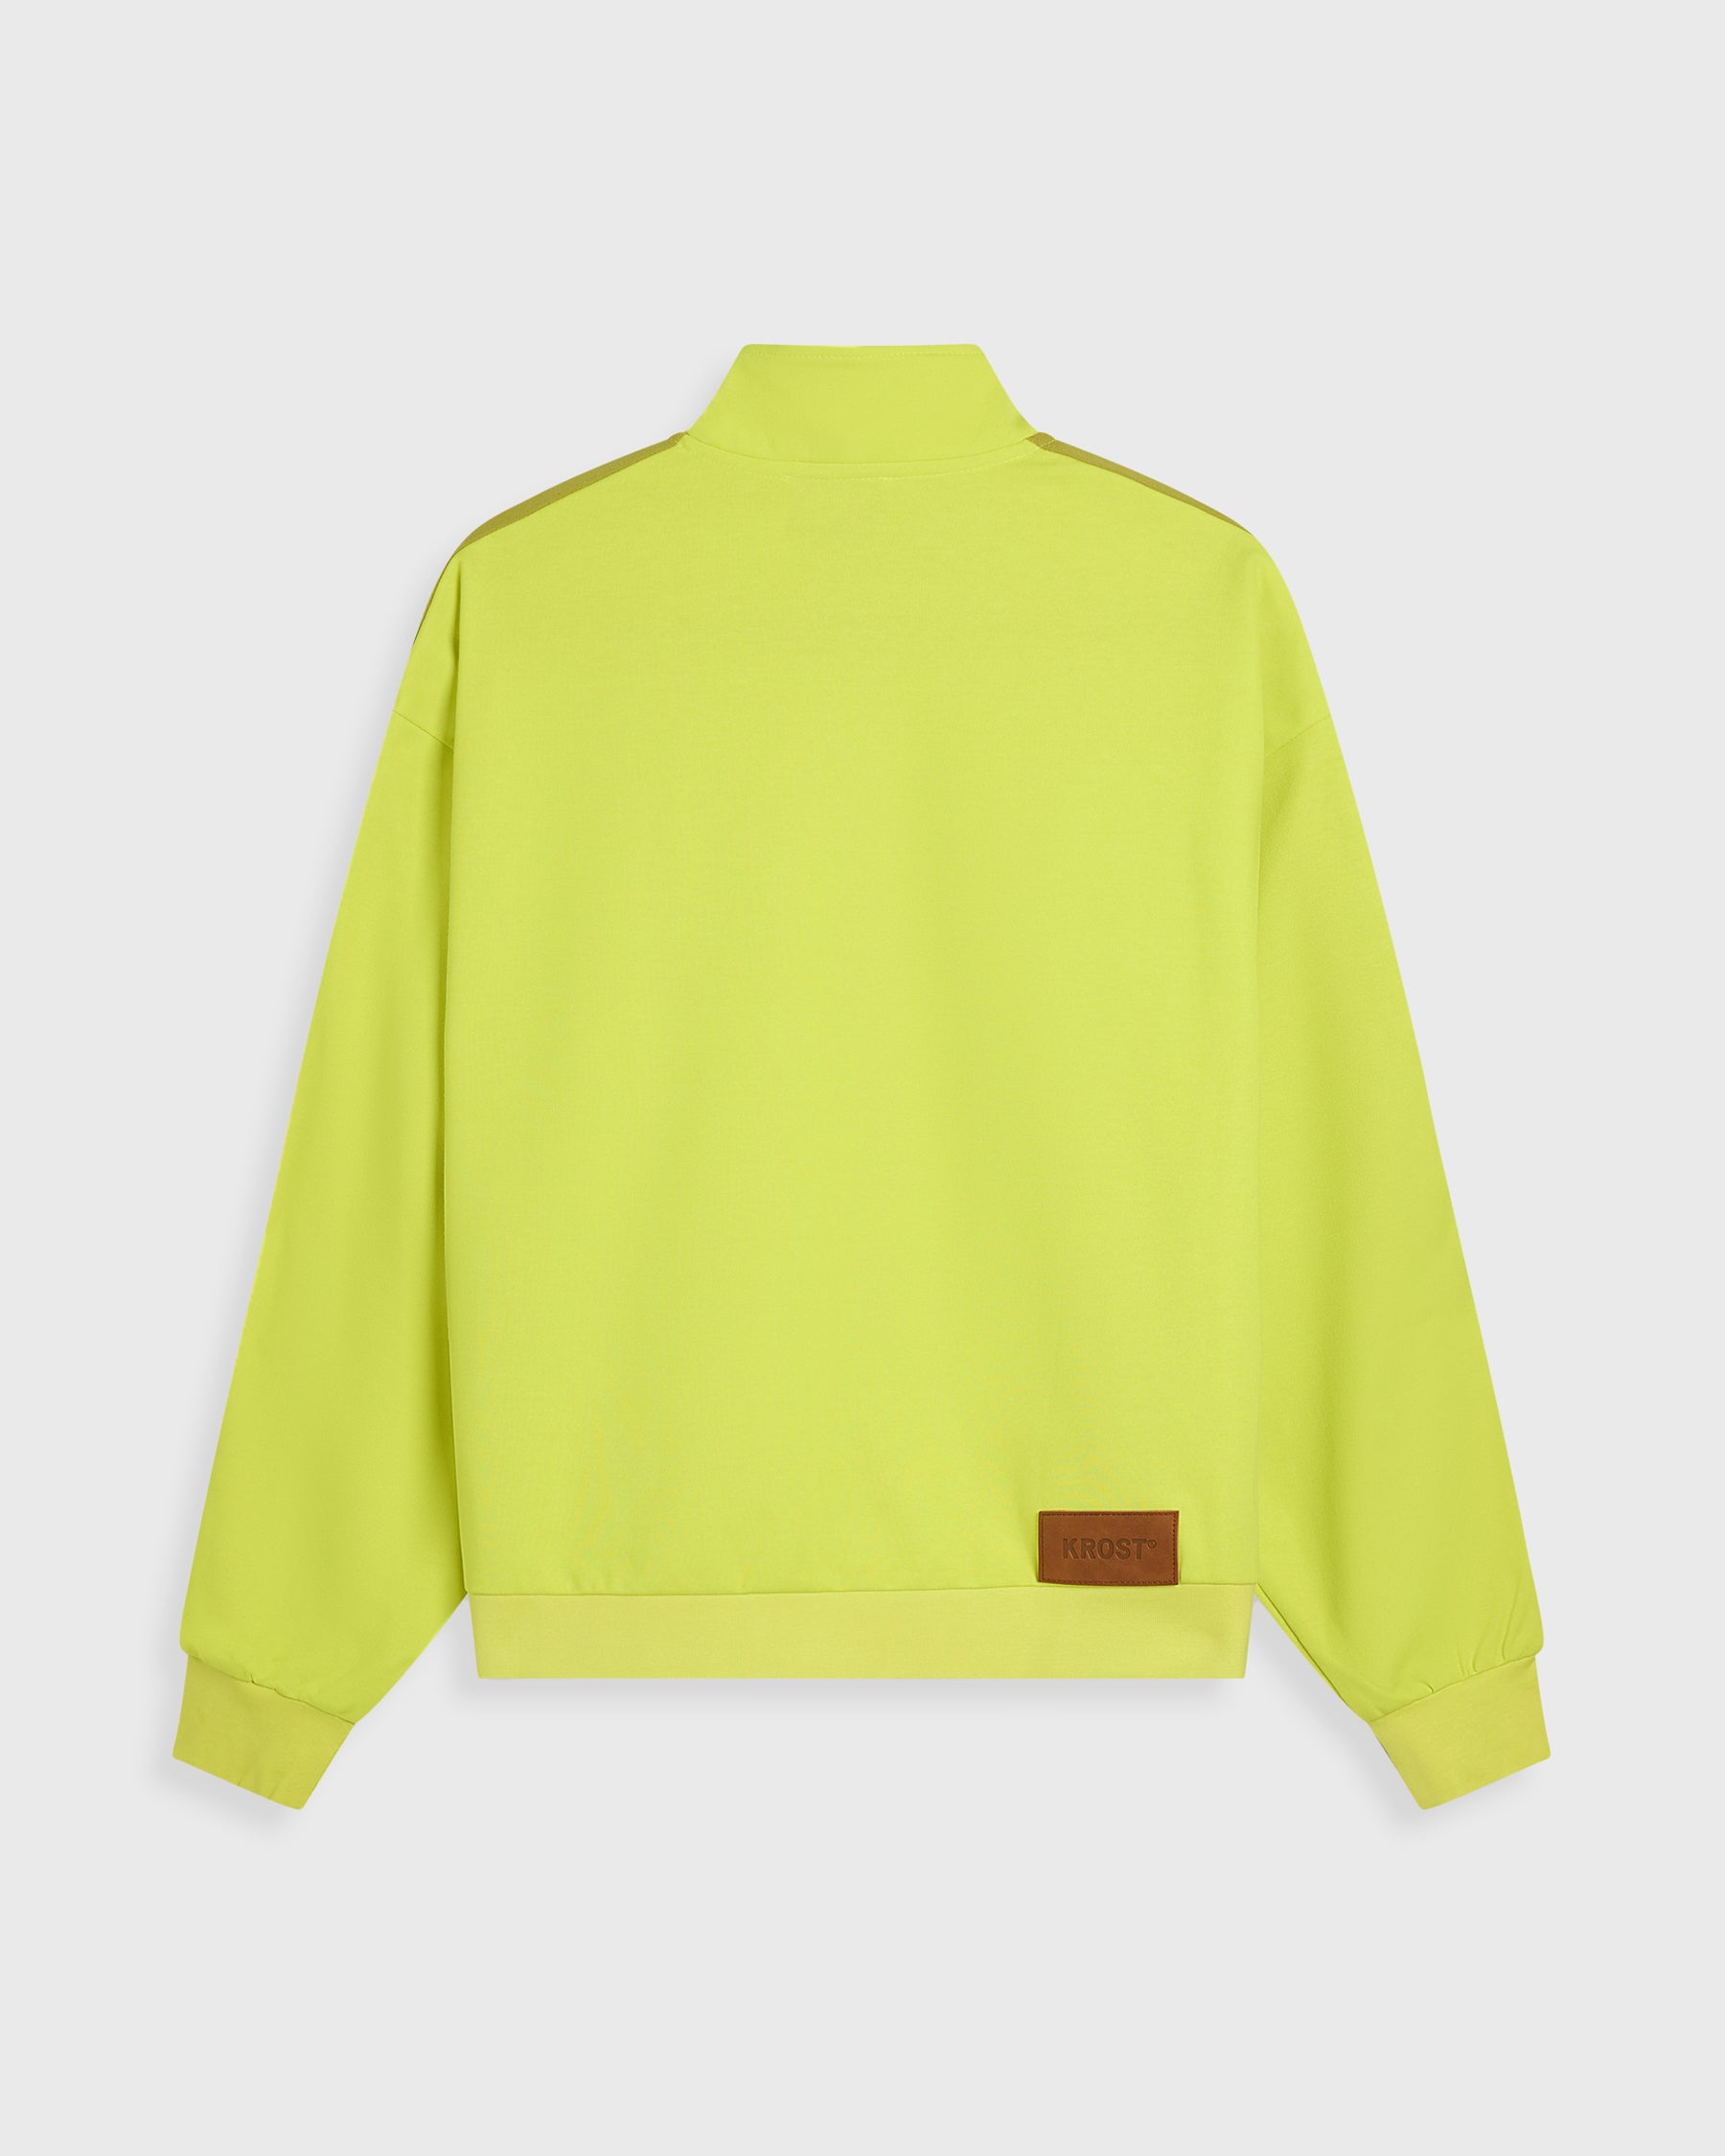 Bright neon yellow hardware deco track jacket – KROST